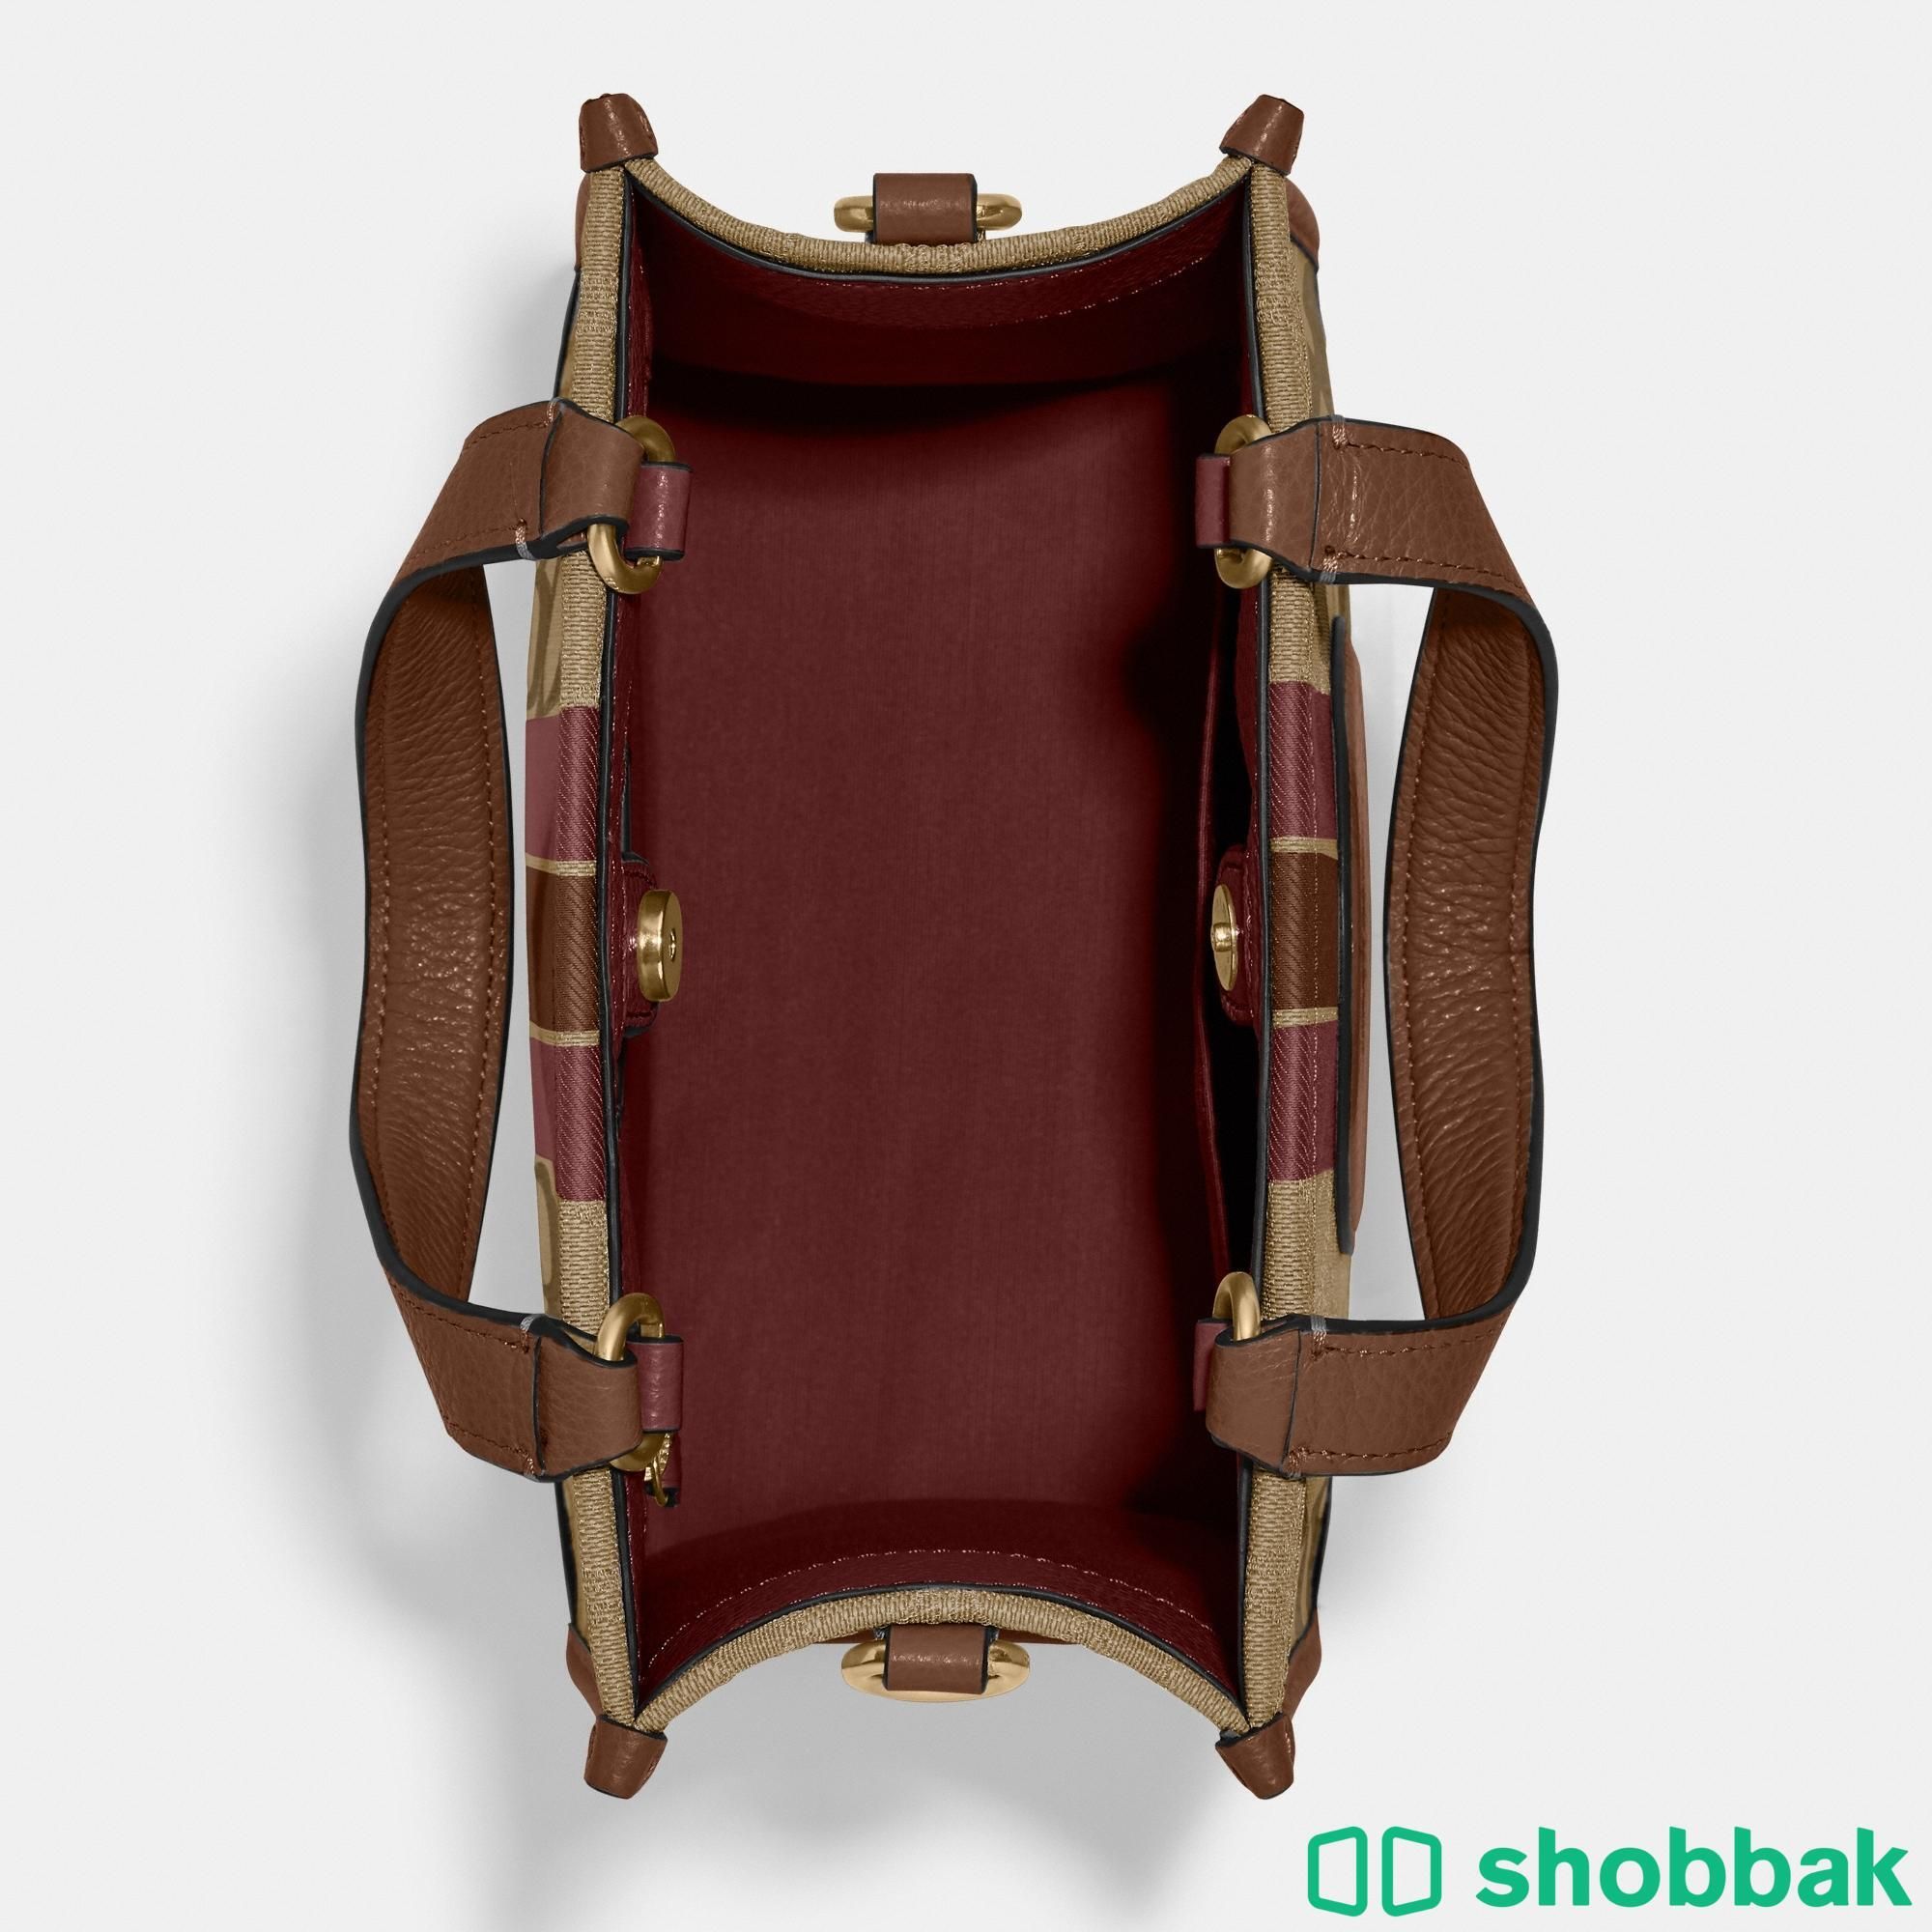 حقيبة ديمبسي من Coach Shobbak Saudi Arabia